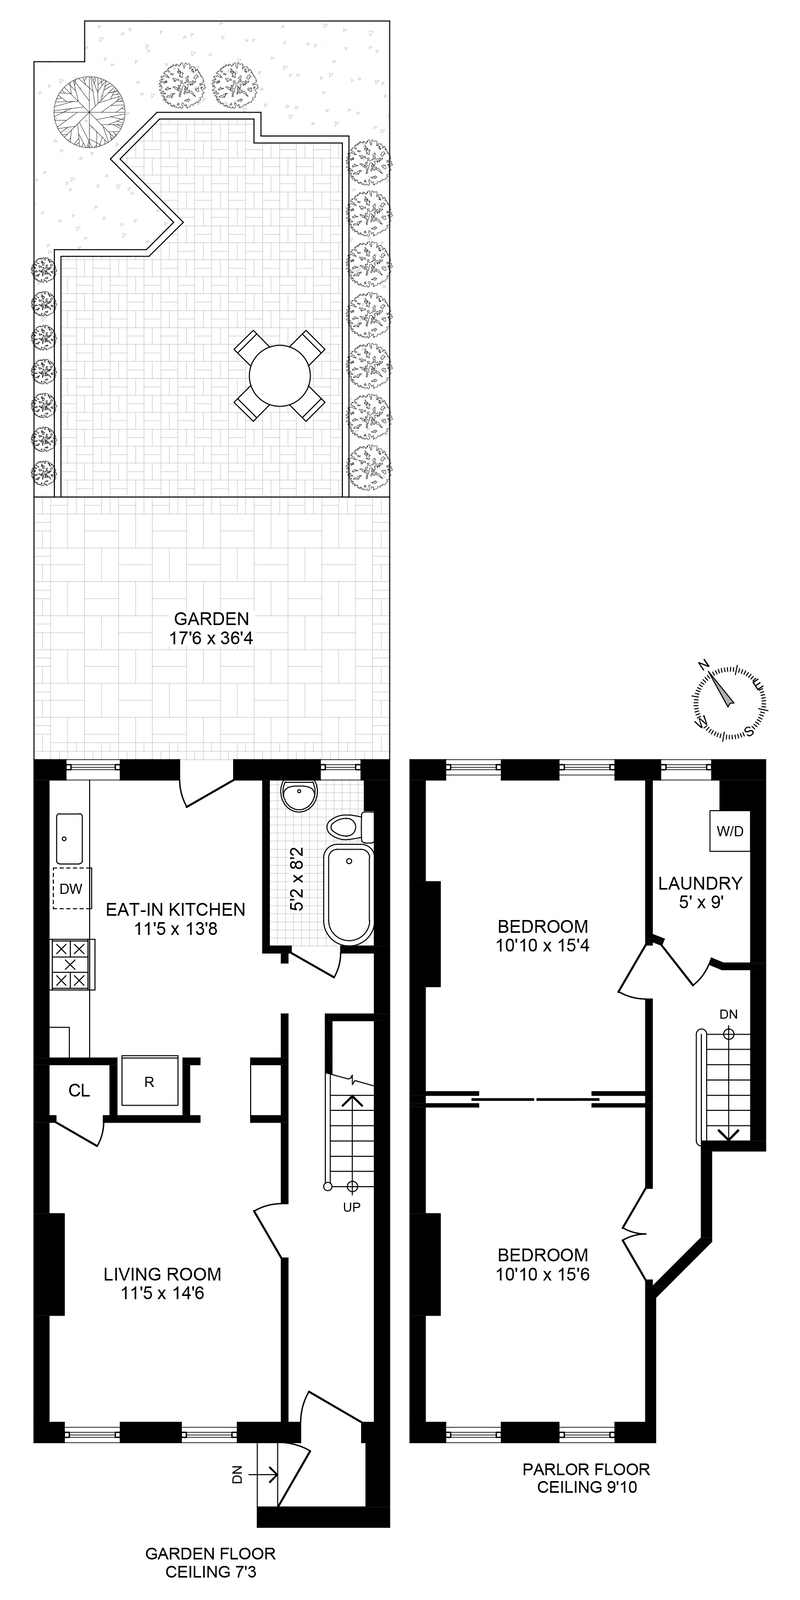 Floorplan for 167, 12th Street, 1